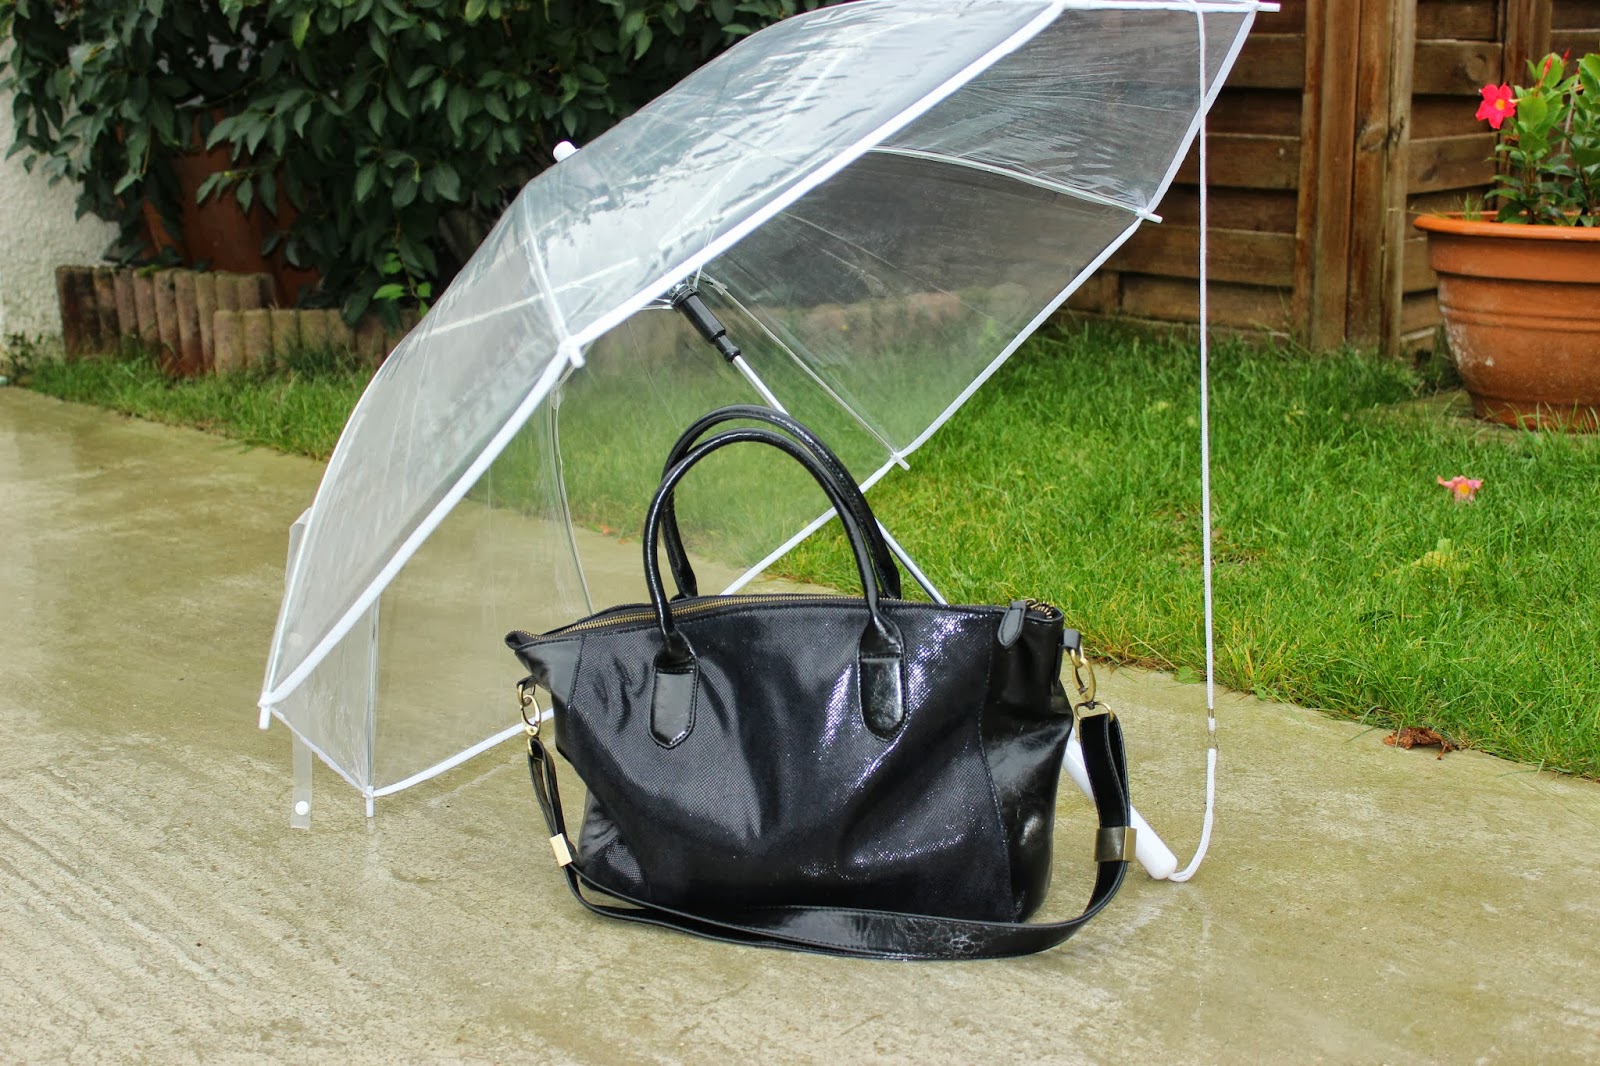 Salsa jean, parapluie transparent, sac naf naf